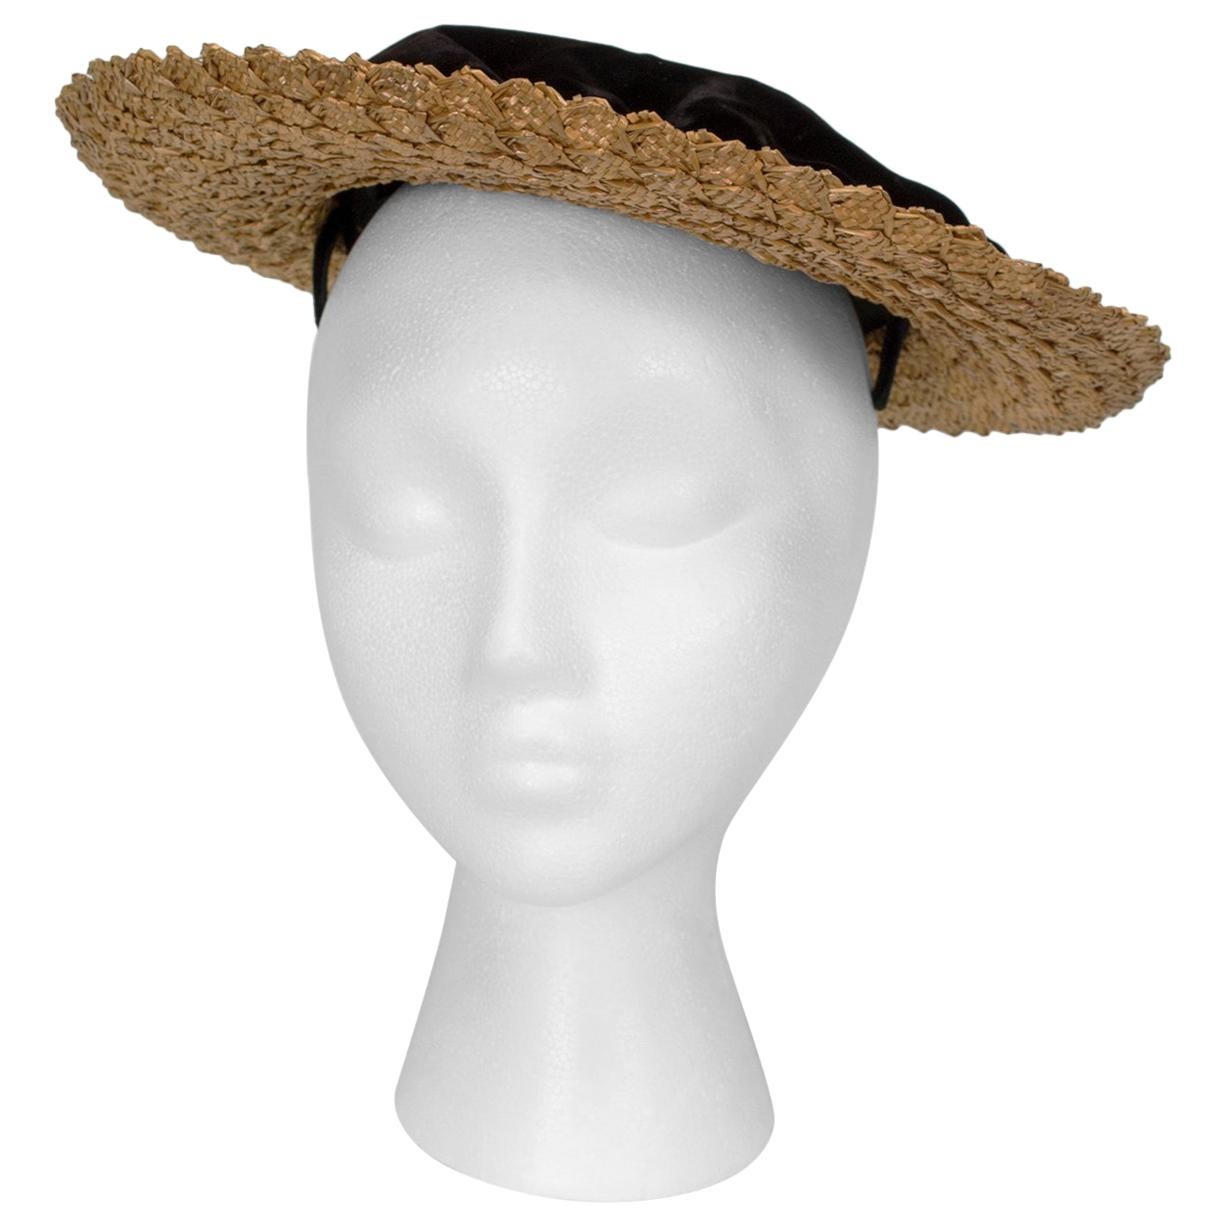 Schiaparelli Paris Black Velvet and Straw Summer Boater Hat - Adjustable, 1950s